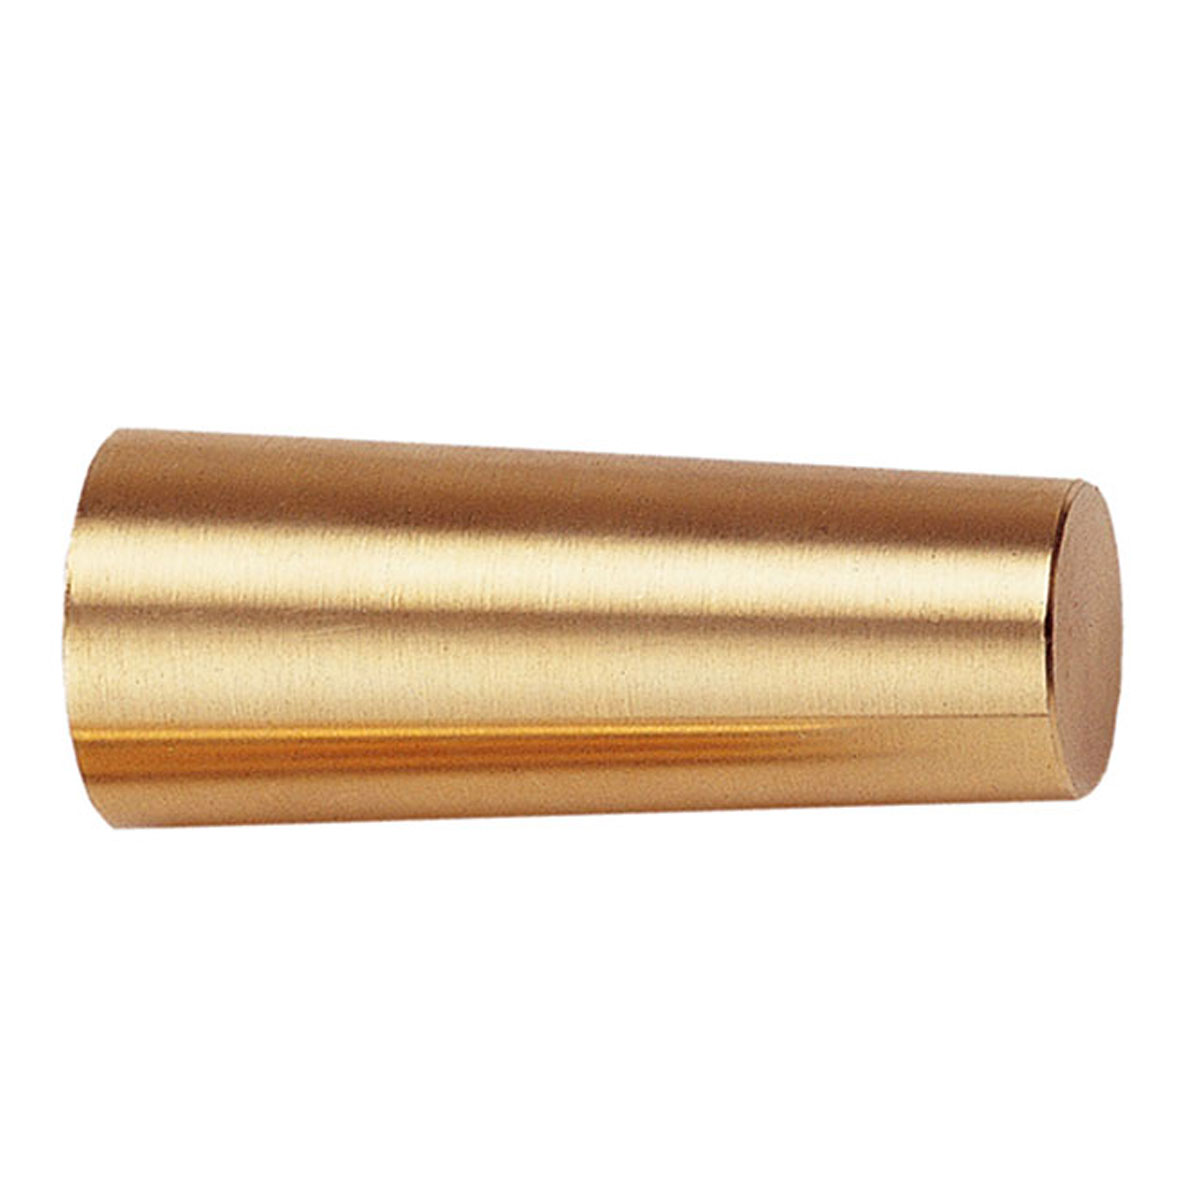 Brass Tube Plug For Tubes 19.1mm OD & BWG 15-22